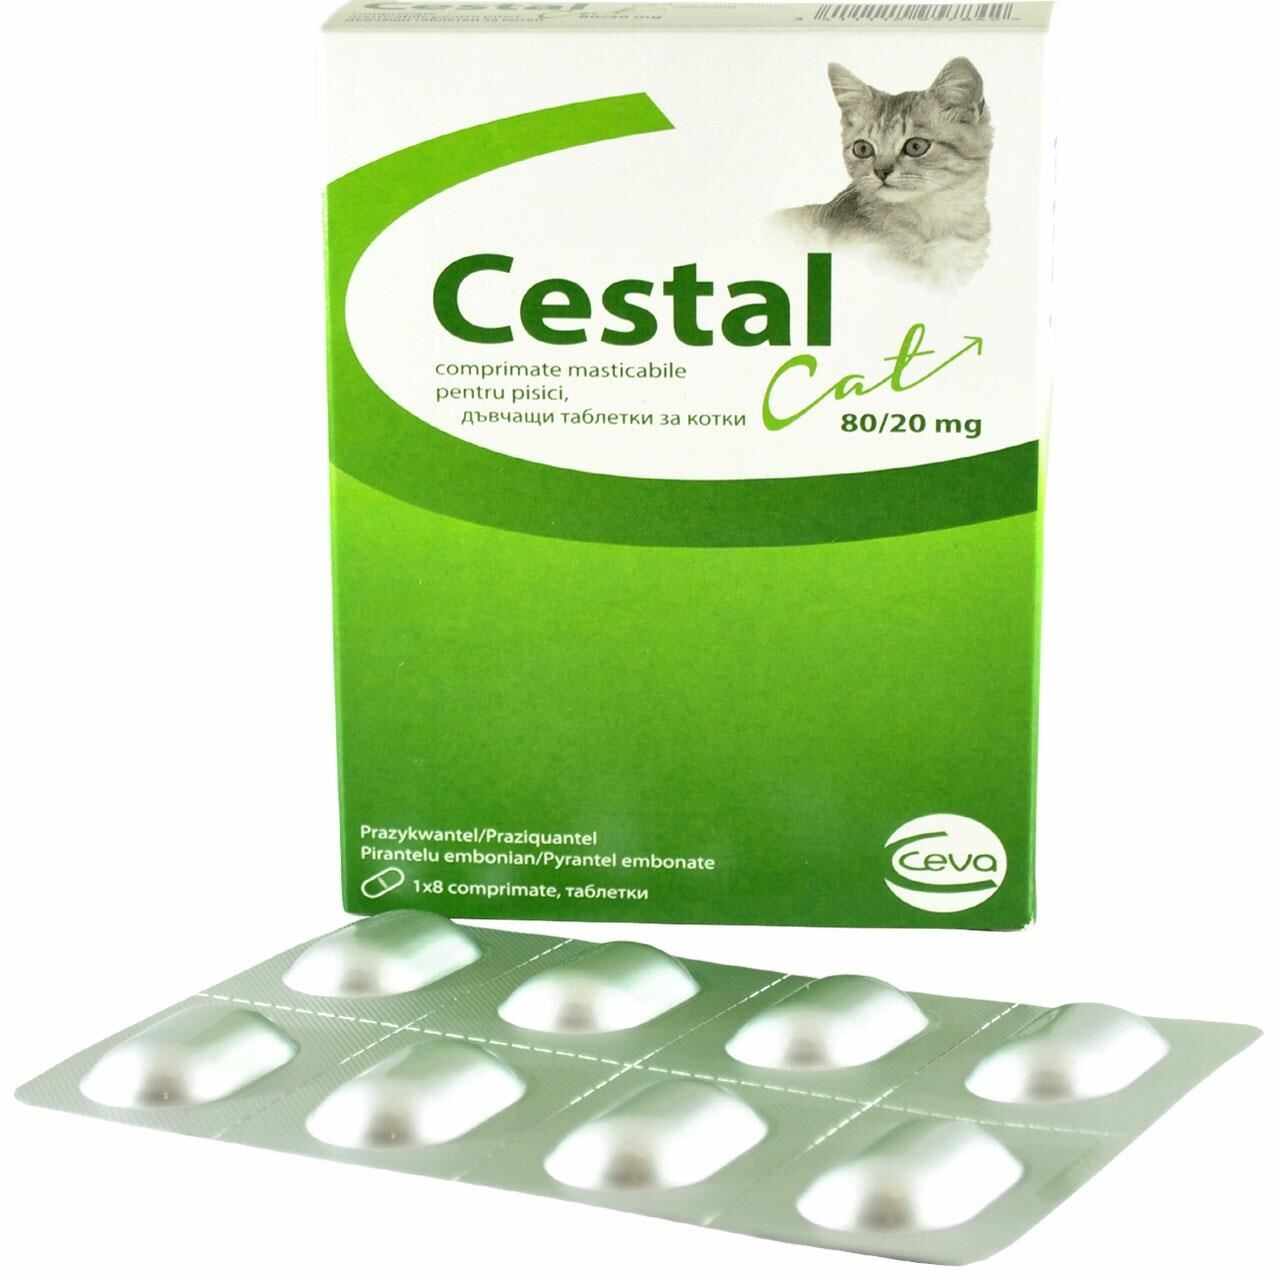 Cestal Cat Chew, 8 tablete masticabile